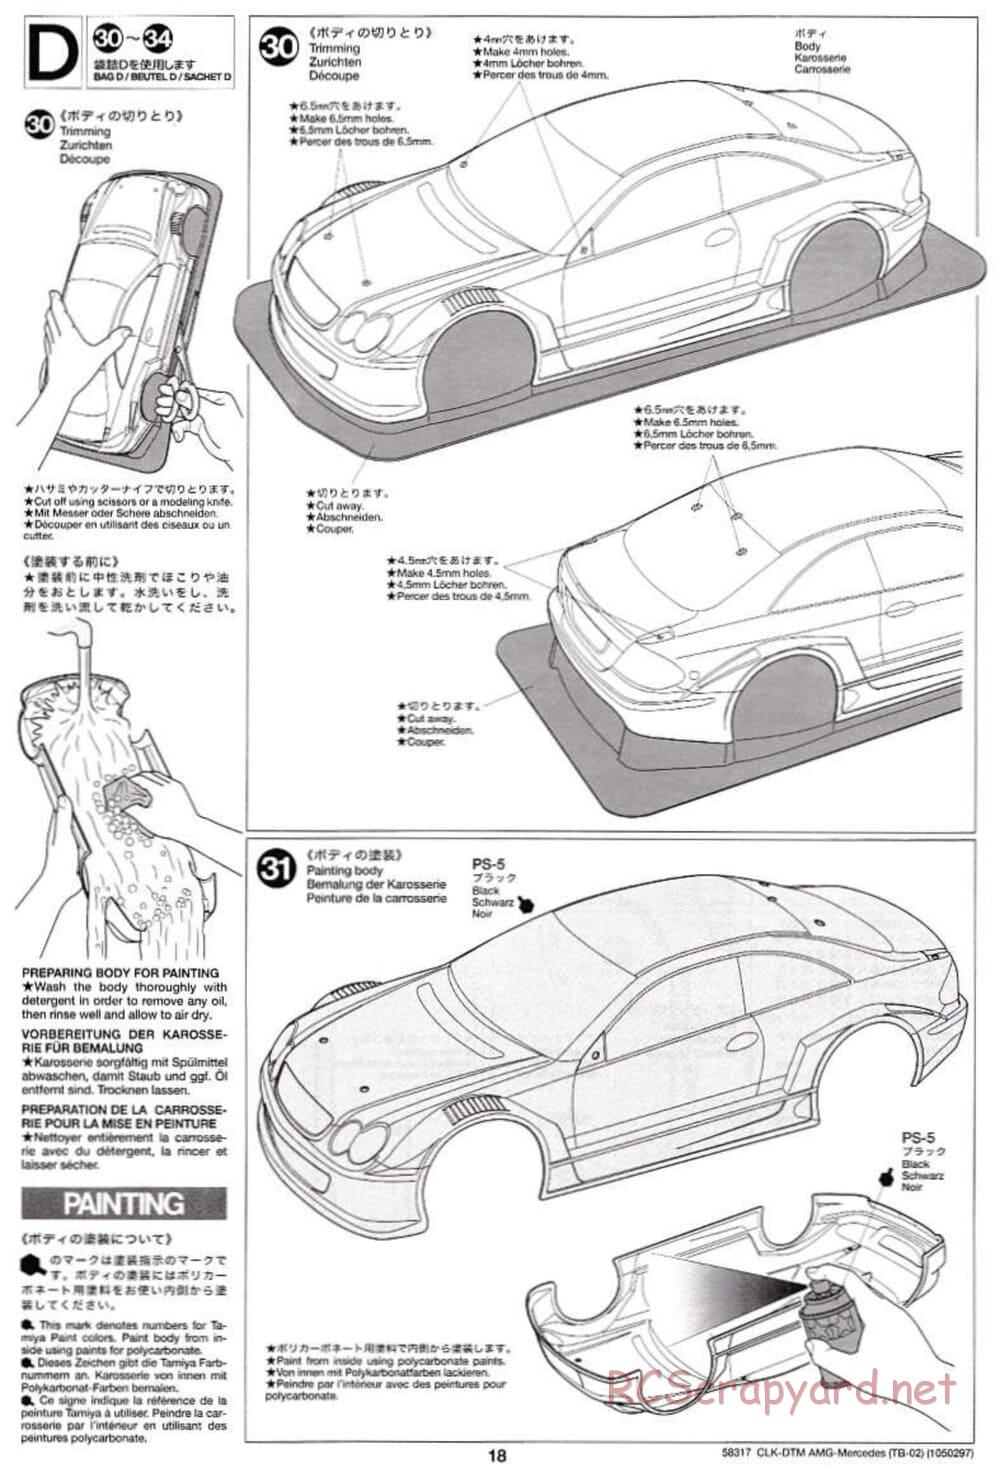 Tamiya - CLK DTM 2002 AMG Mercedes - TB-02 Chassis - Manual - Page 18